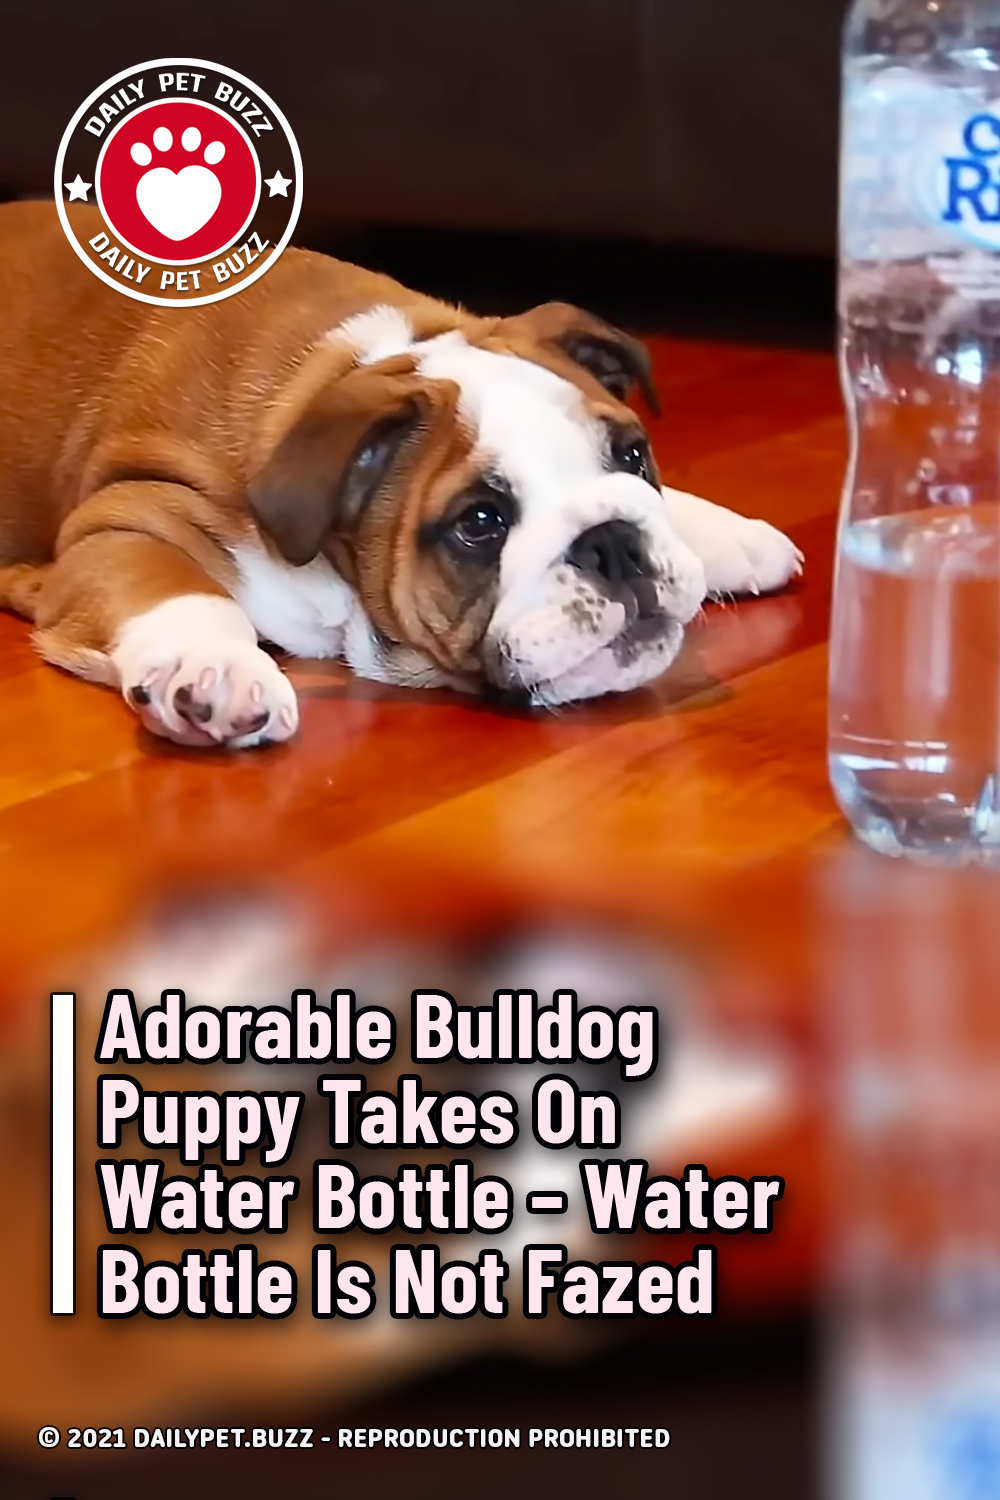 Adorable Bulldog Puppy Takes On Water Bottle – Water Bottle Is Not Fazed